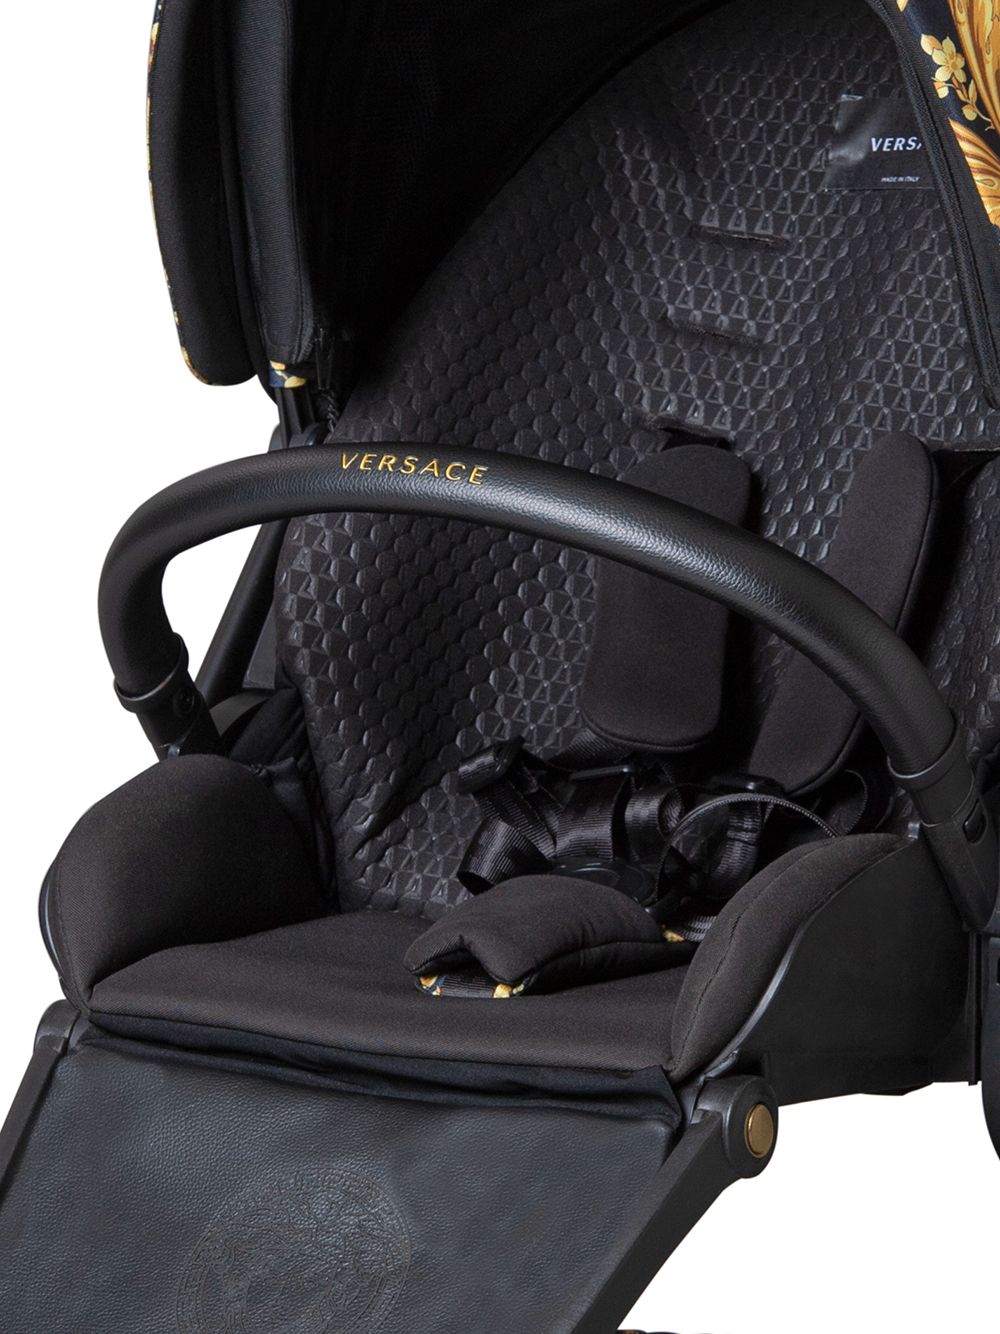 Black and gold stroller for newborns